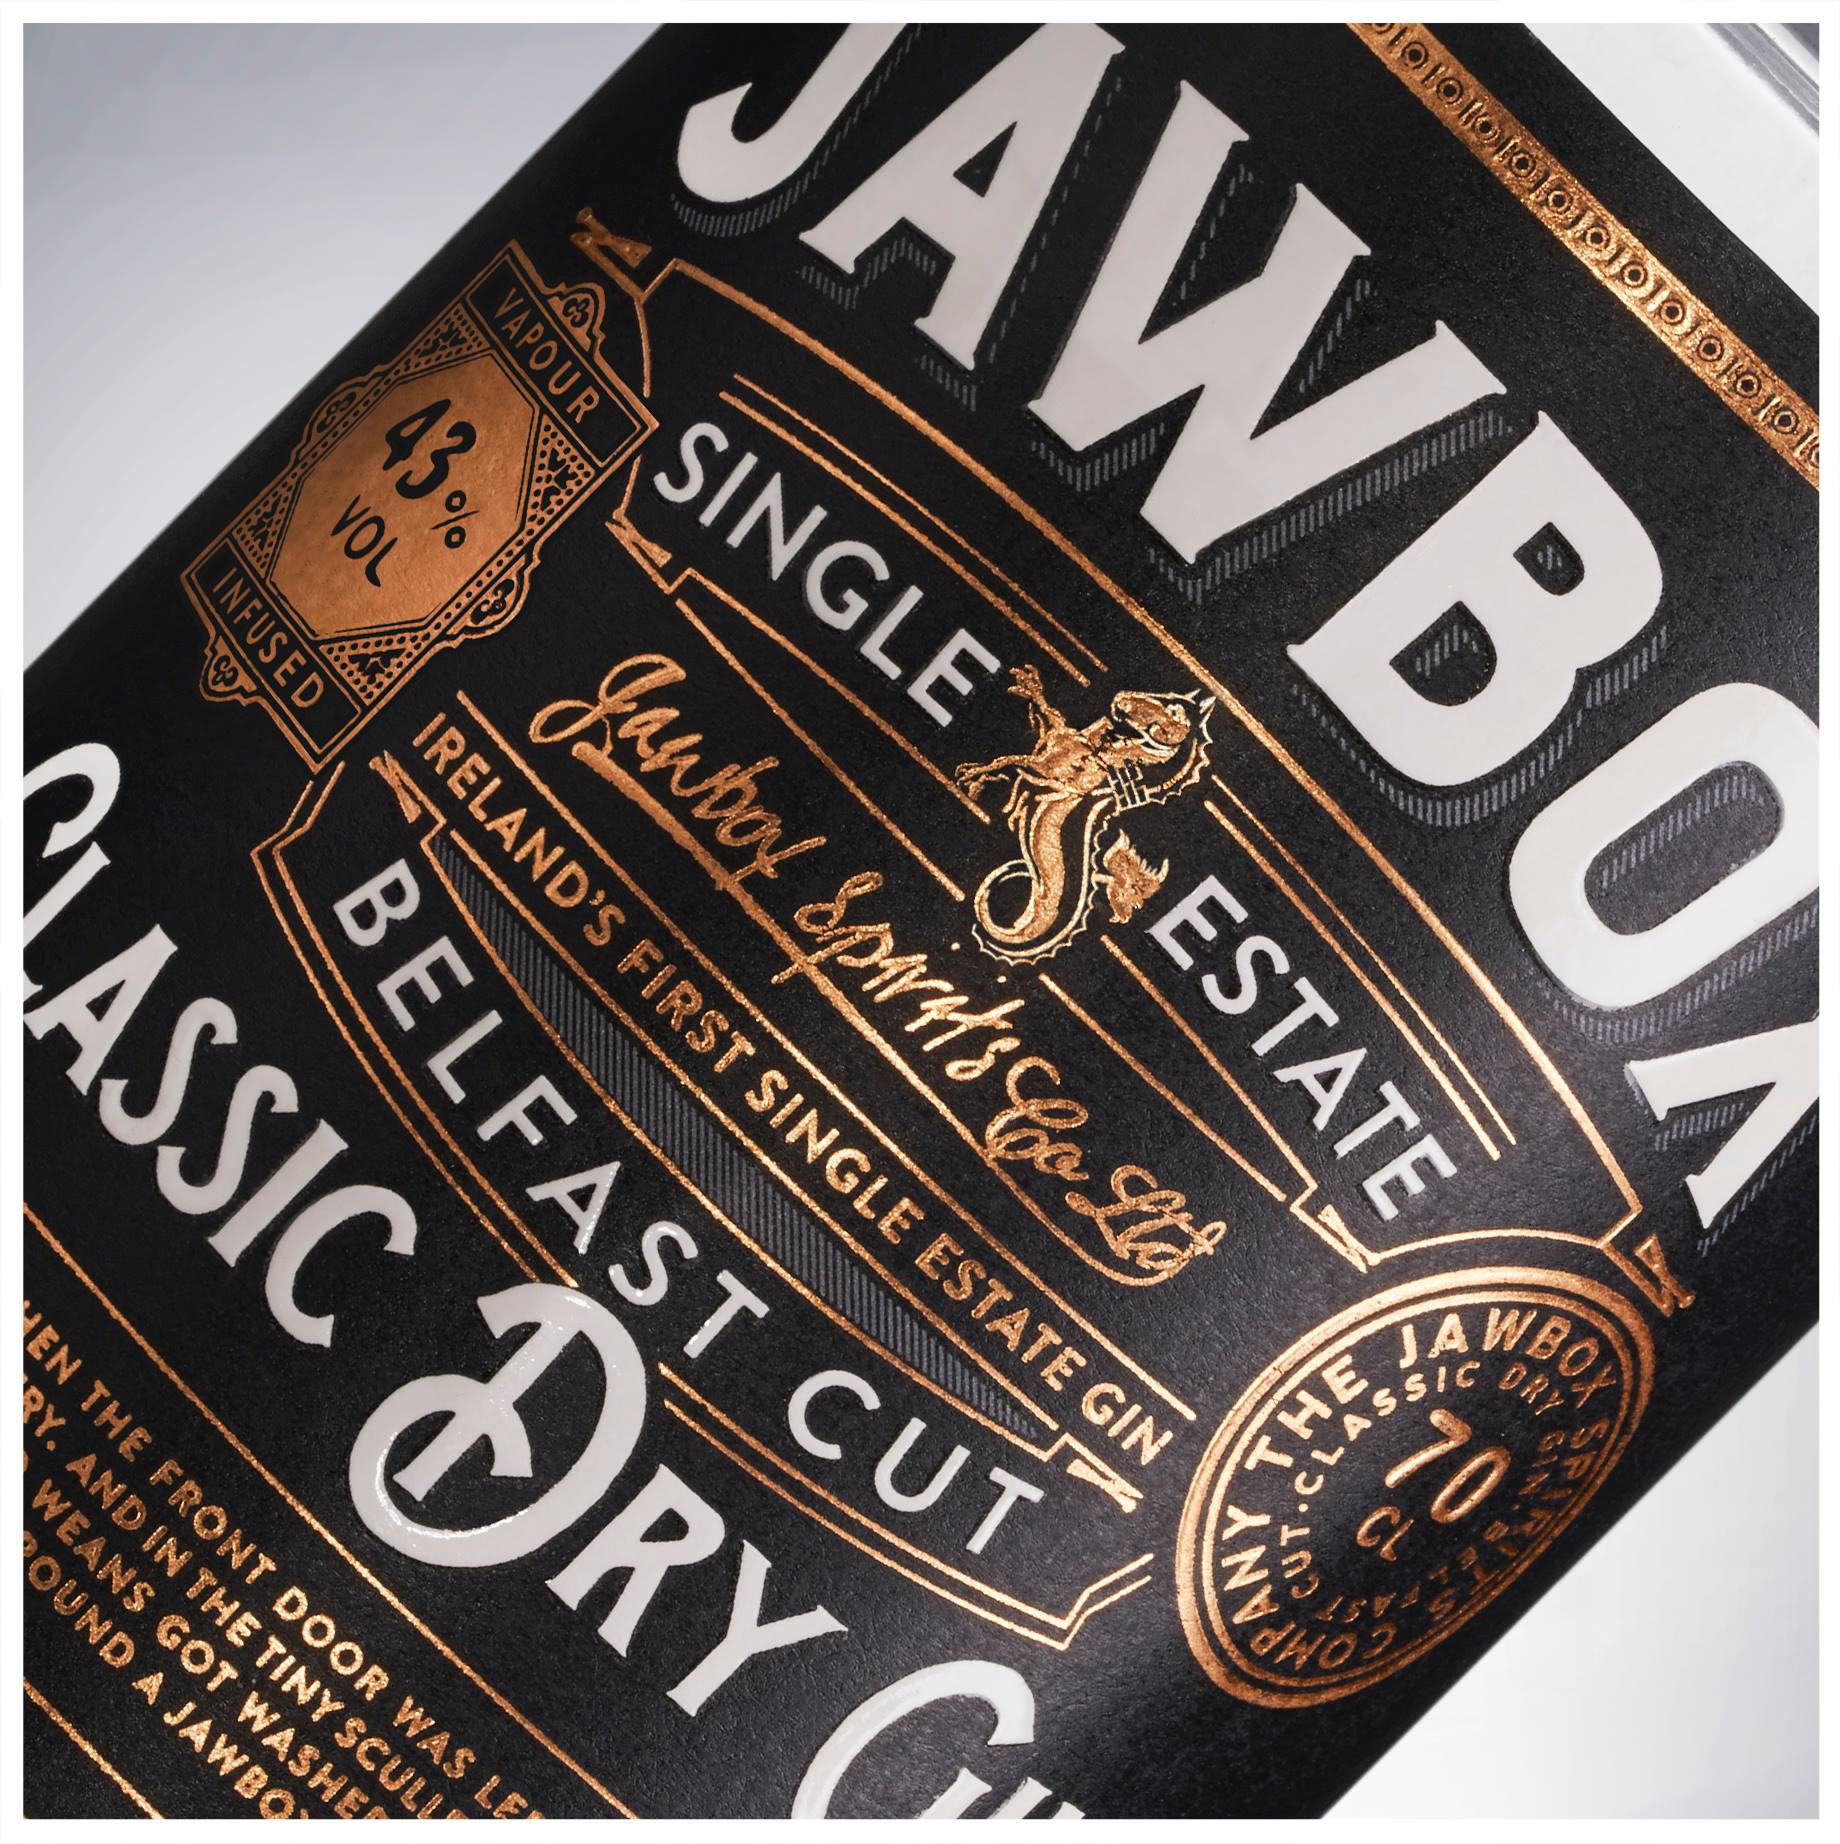 Jawbox Gin: Client Drinksology / Jawbox Gin 